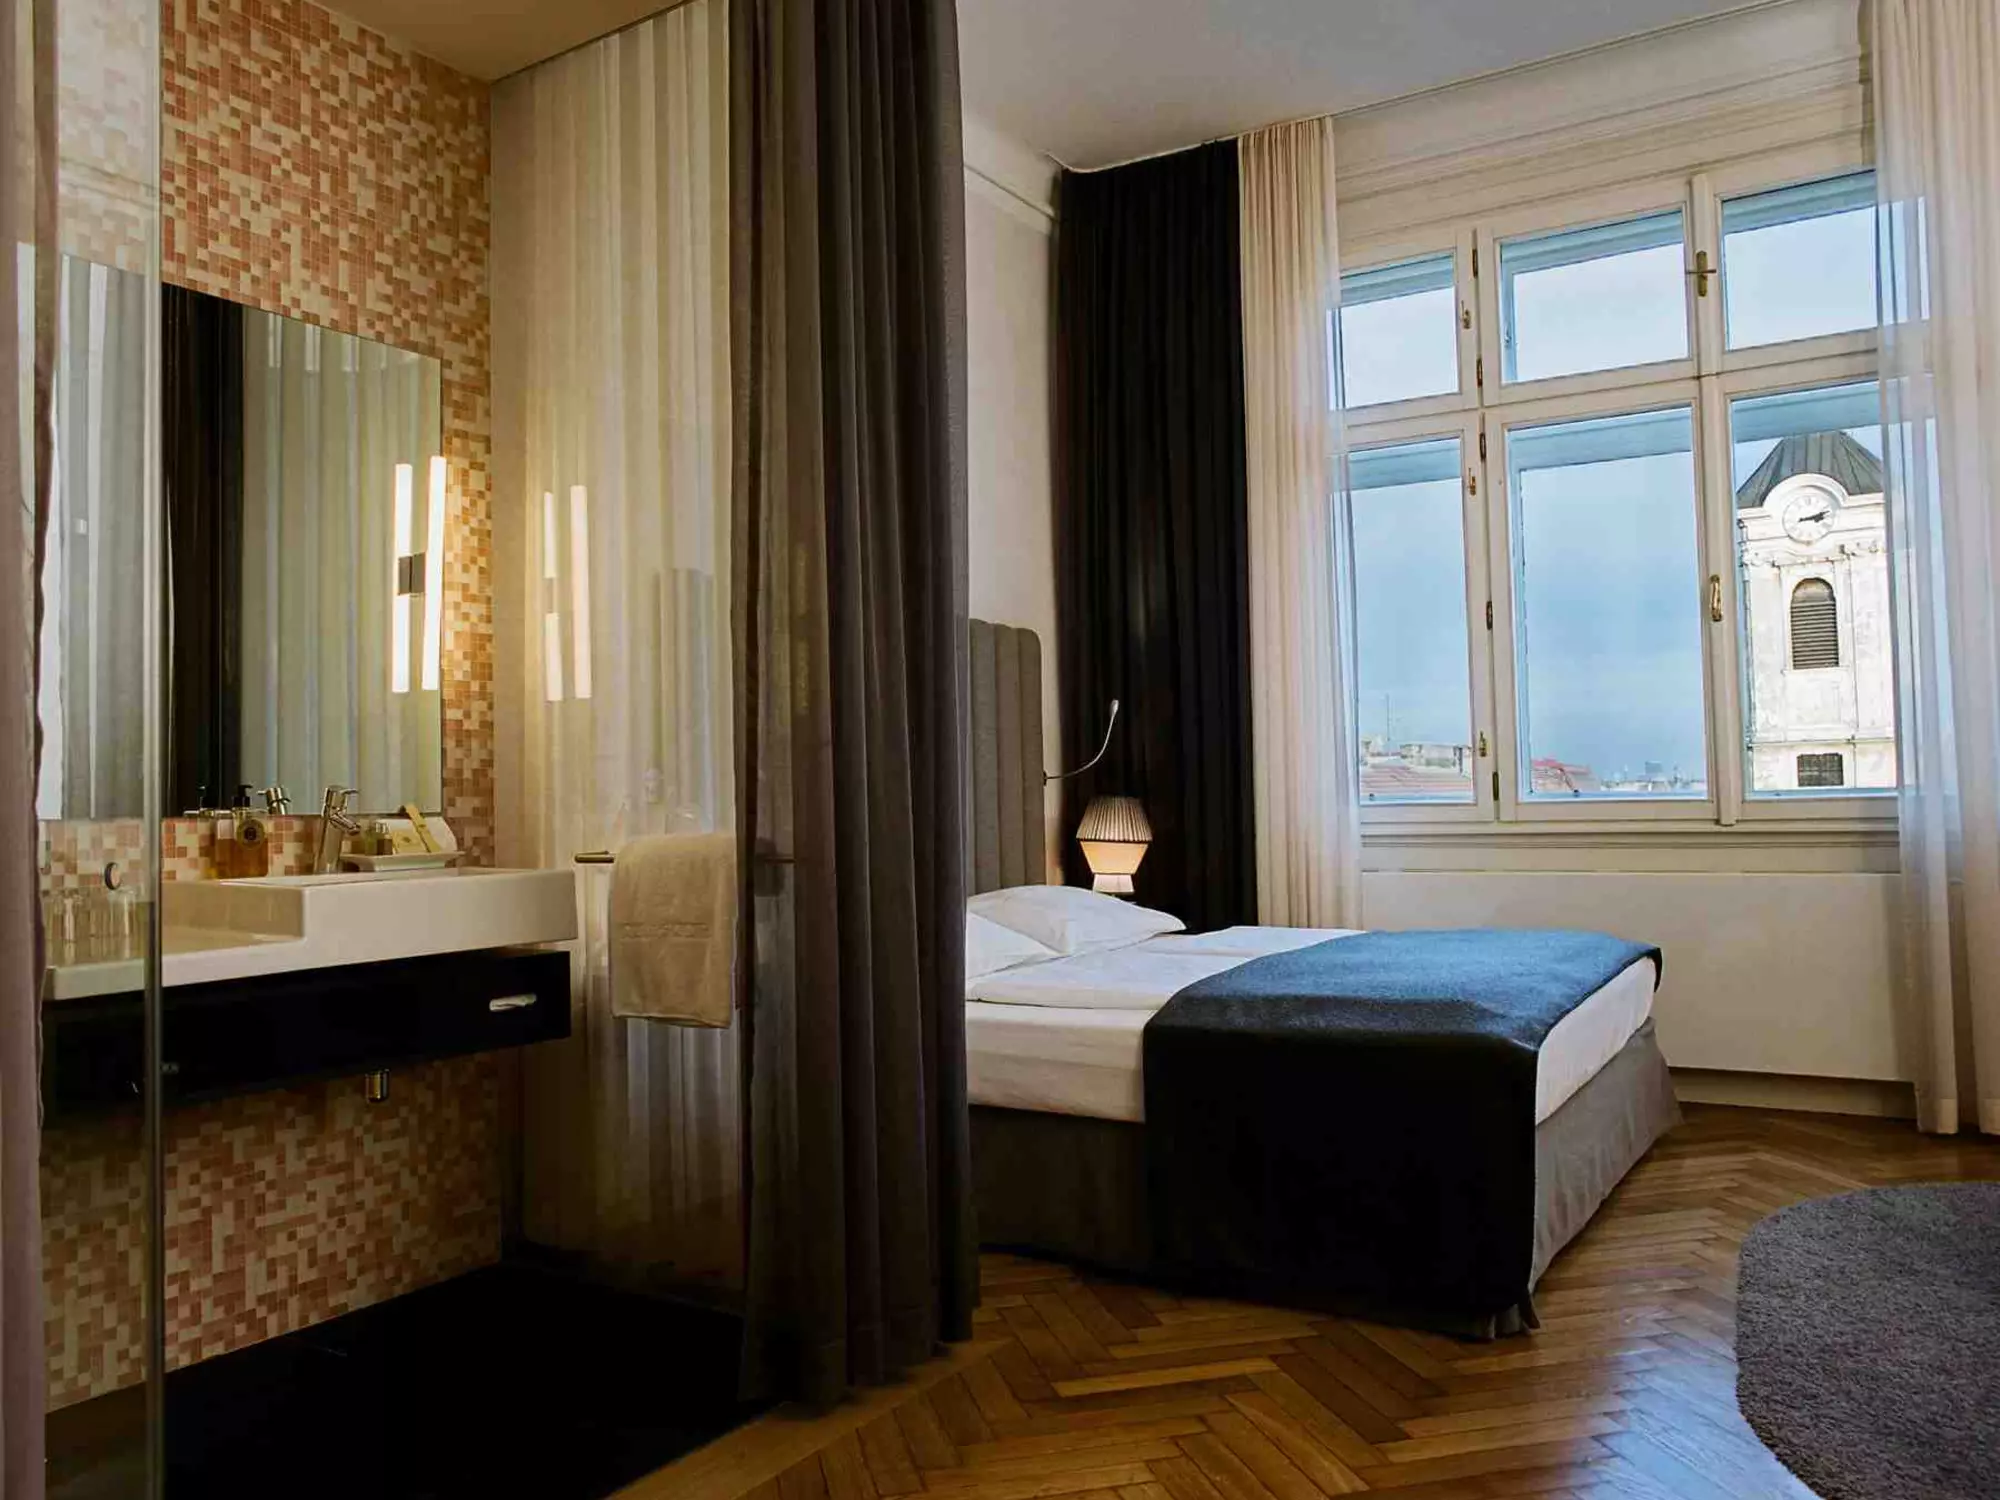 Doppelzimmer Large #51 - POLKA Room - Boutique Hotel Altstadt Vienna